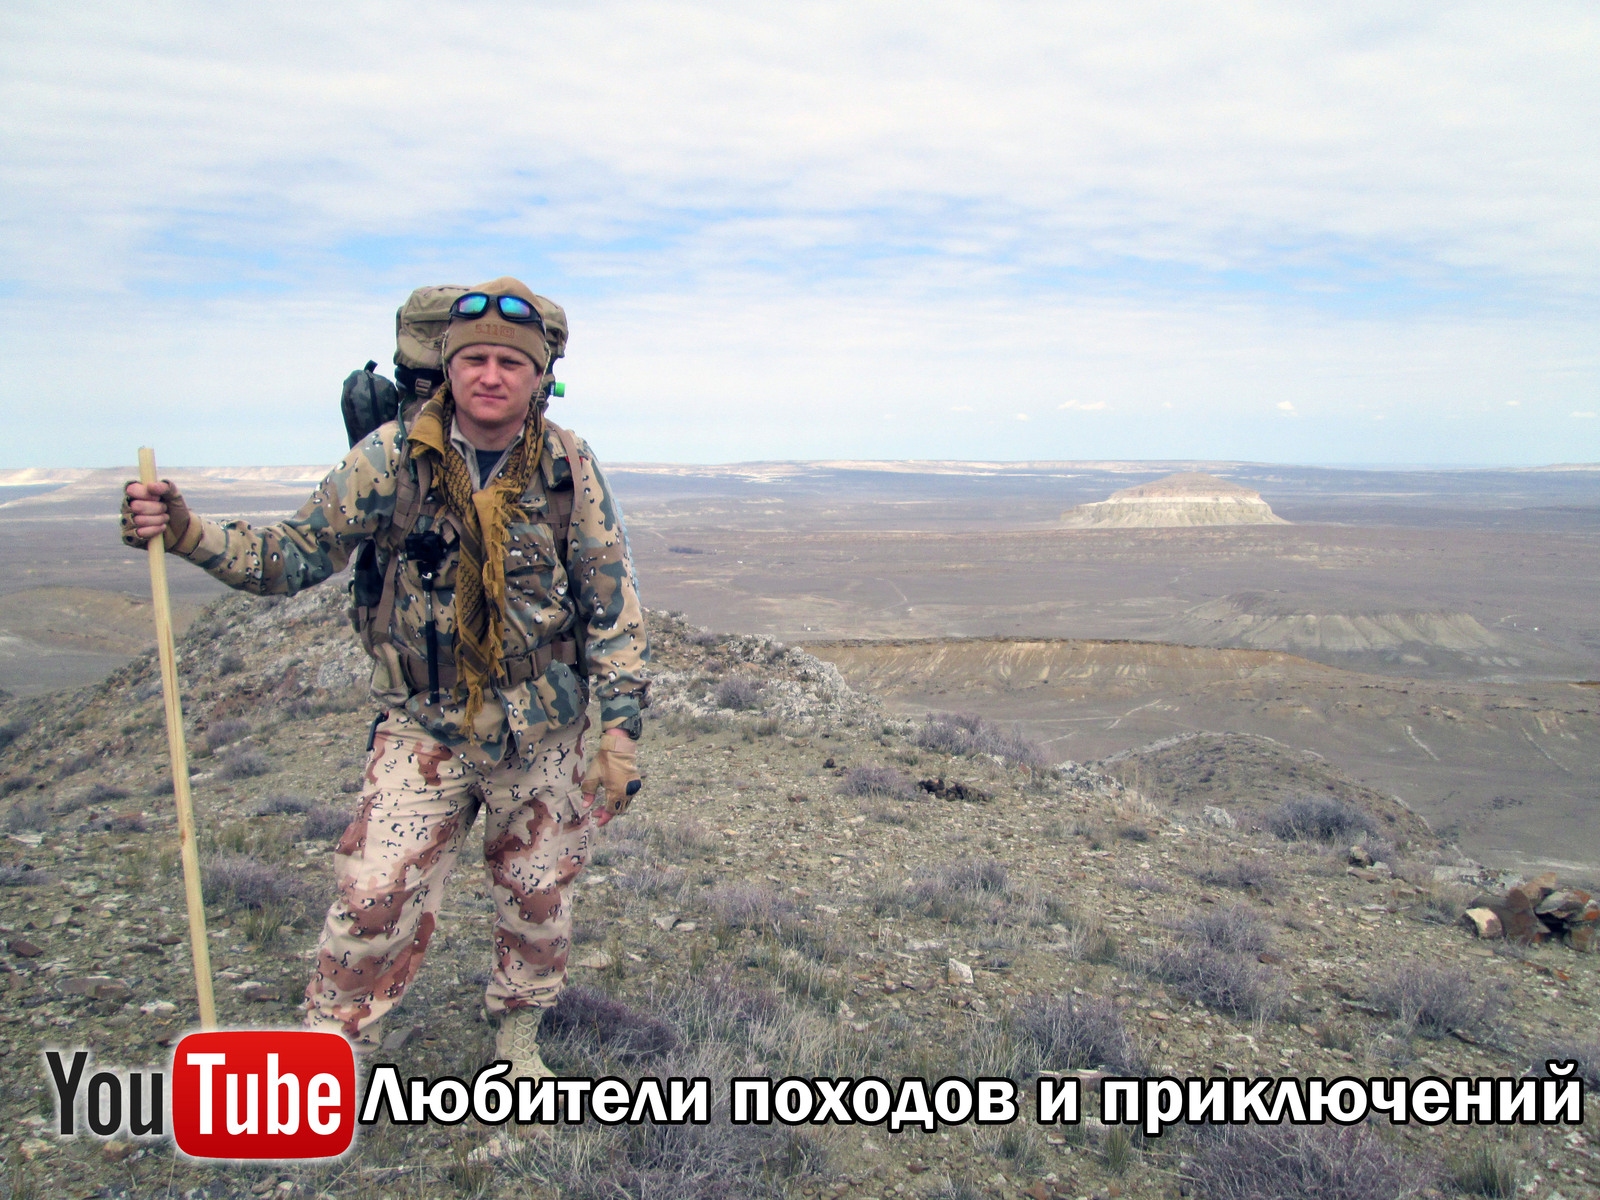 Hiking in Mangistau. 8 days. Video coming soon - Longpost, Kazakhstan, Mangystau region, Hiking, My